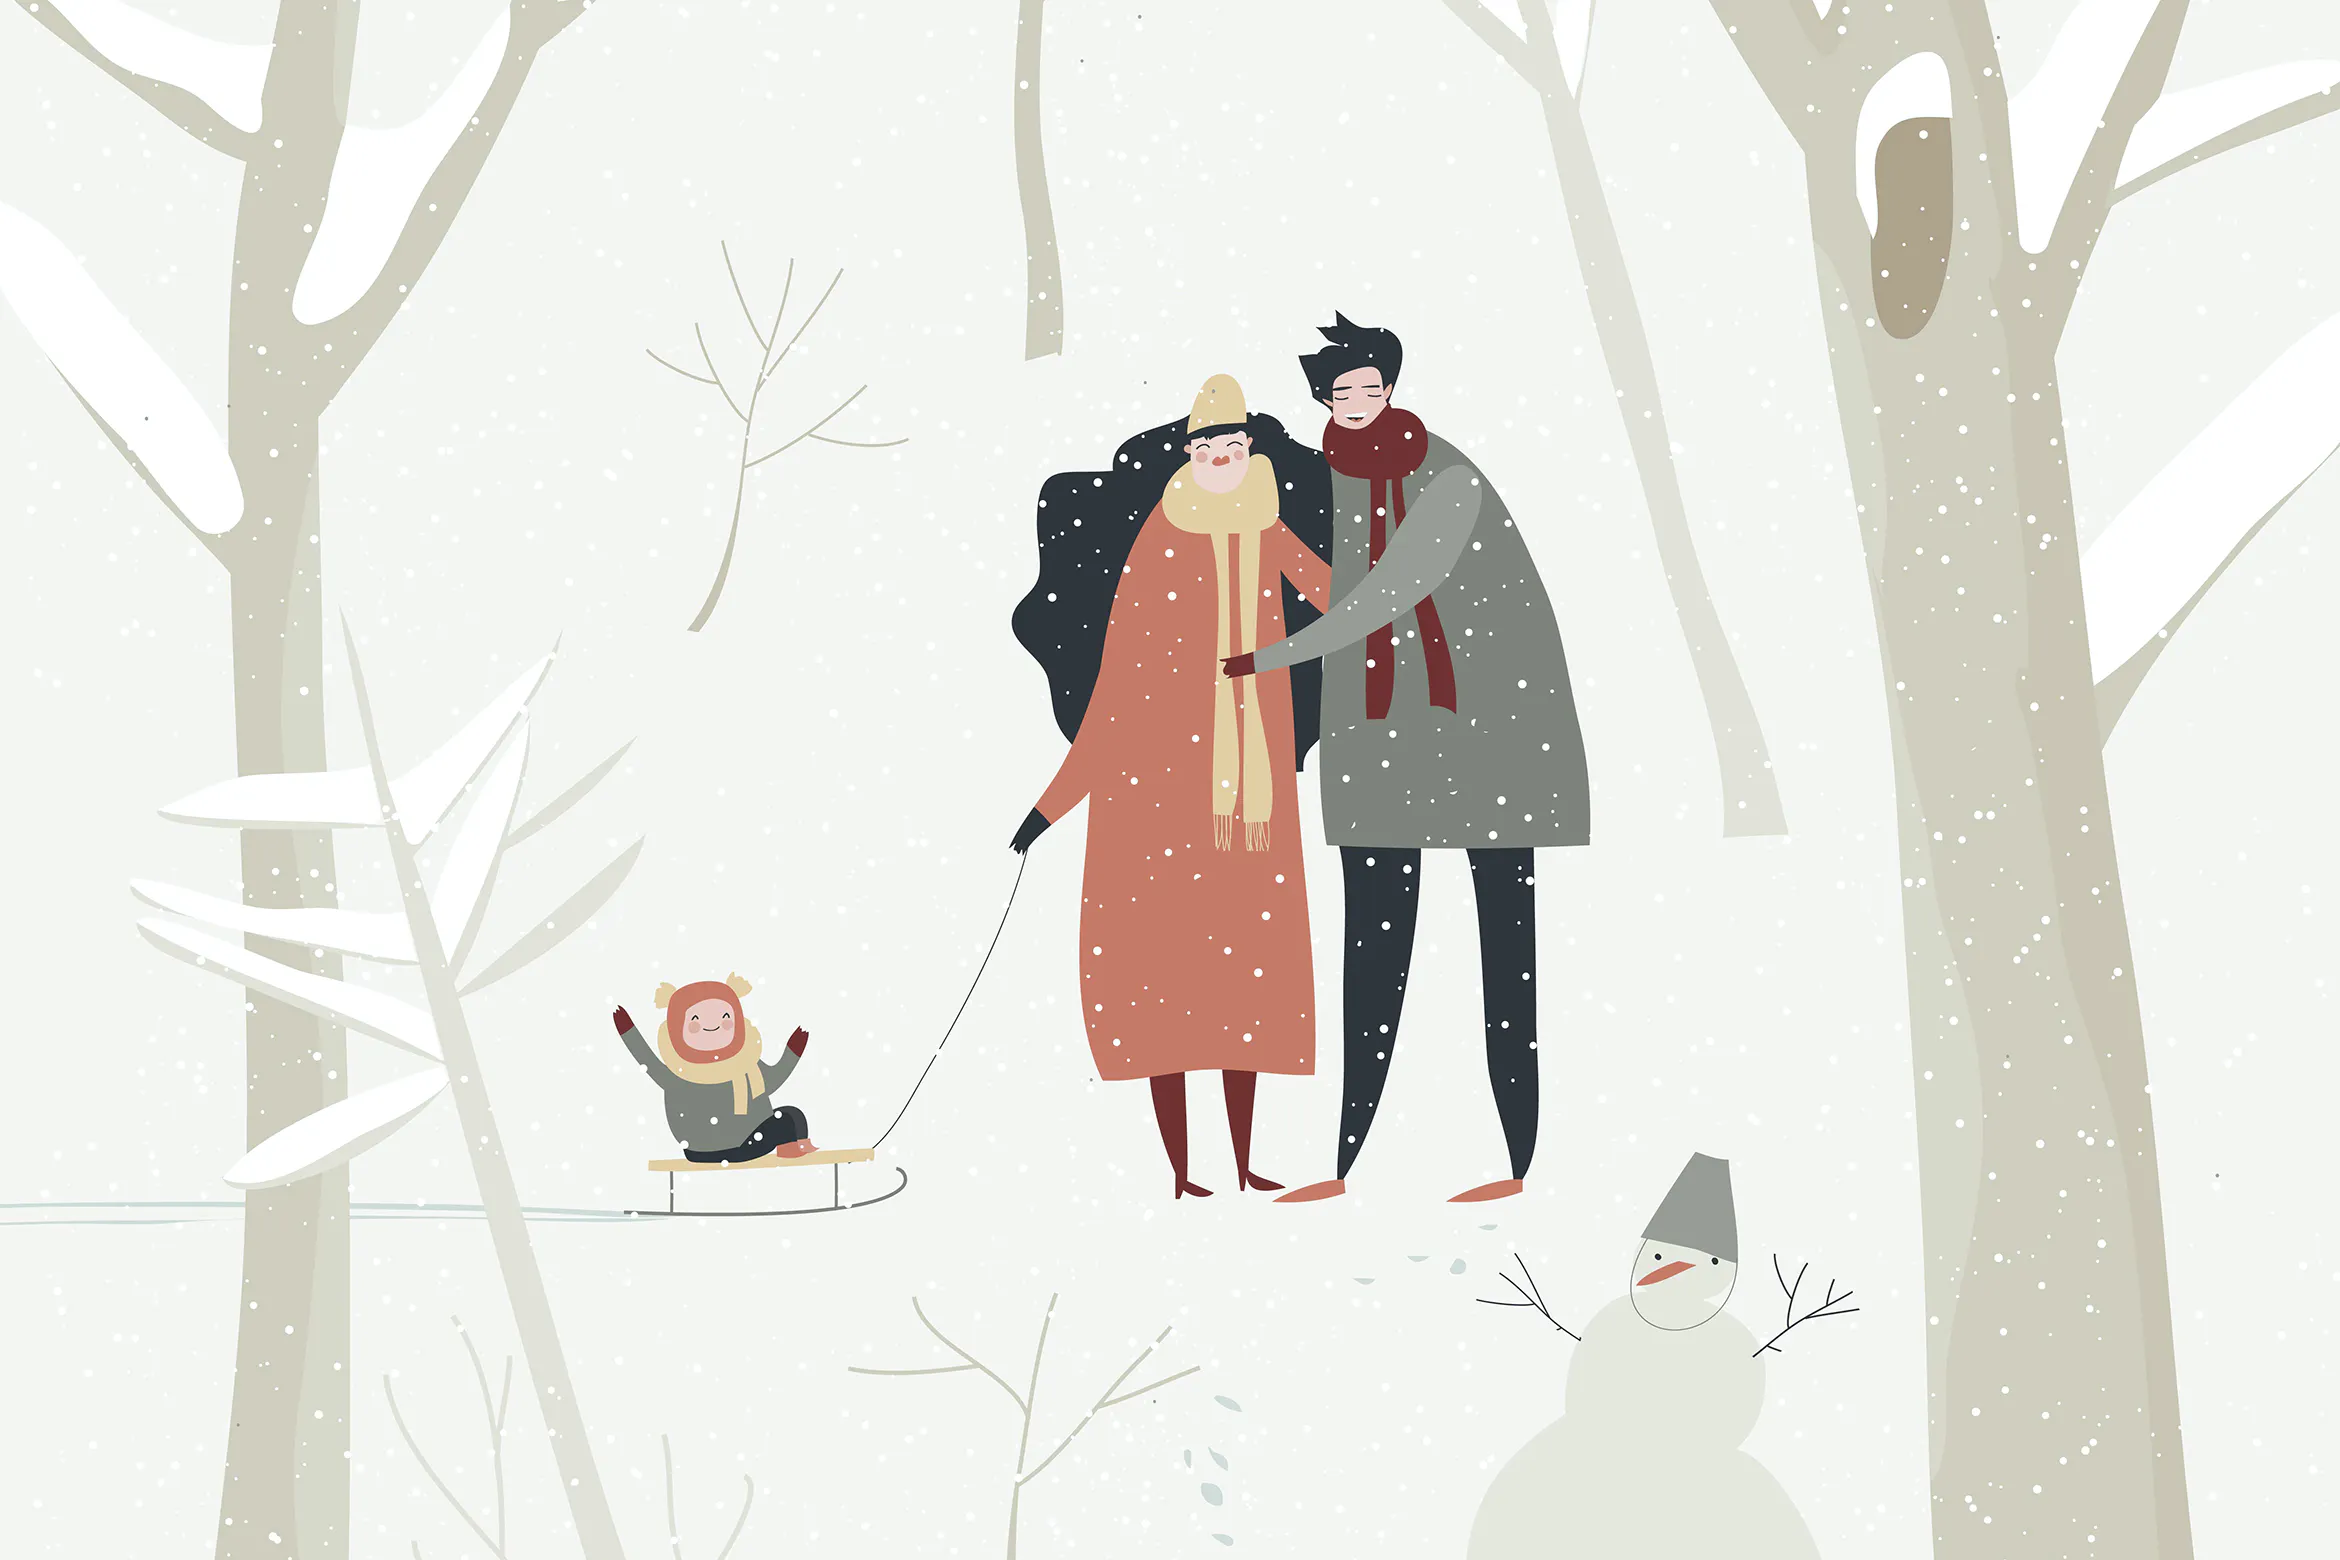 Cartoon happy family walking in winter forest. Vec